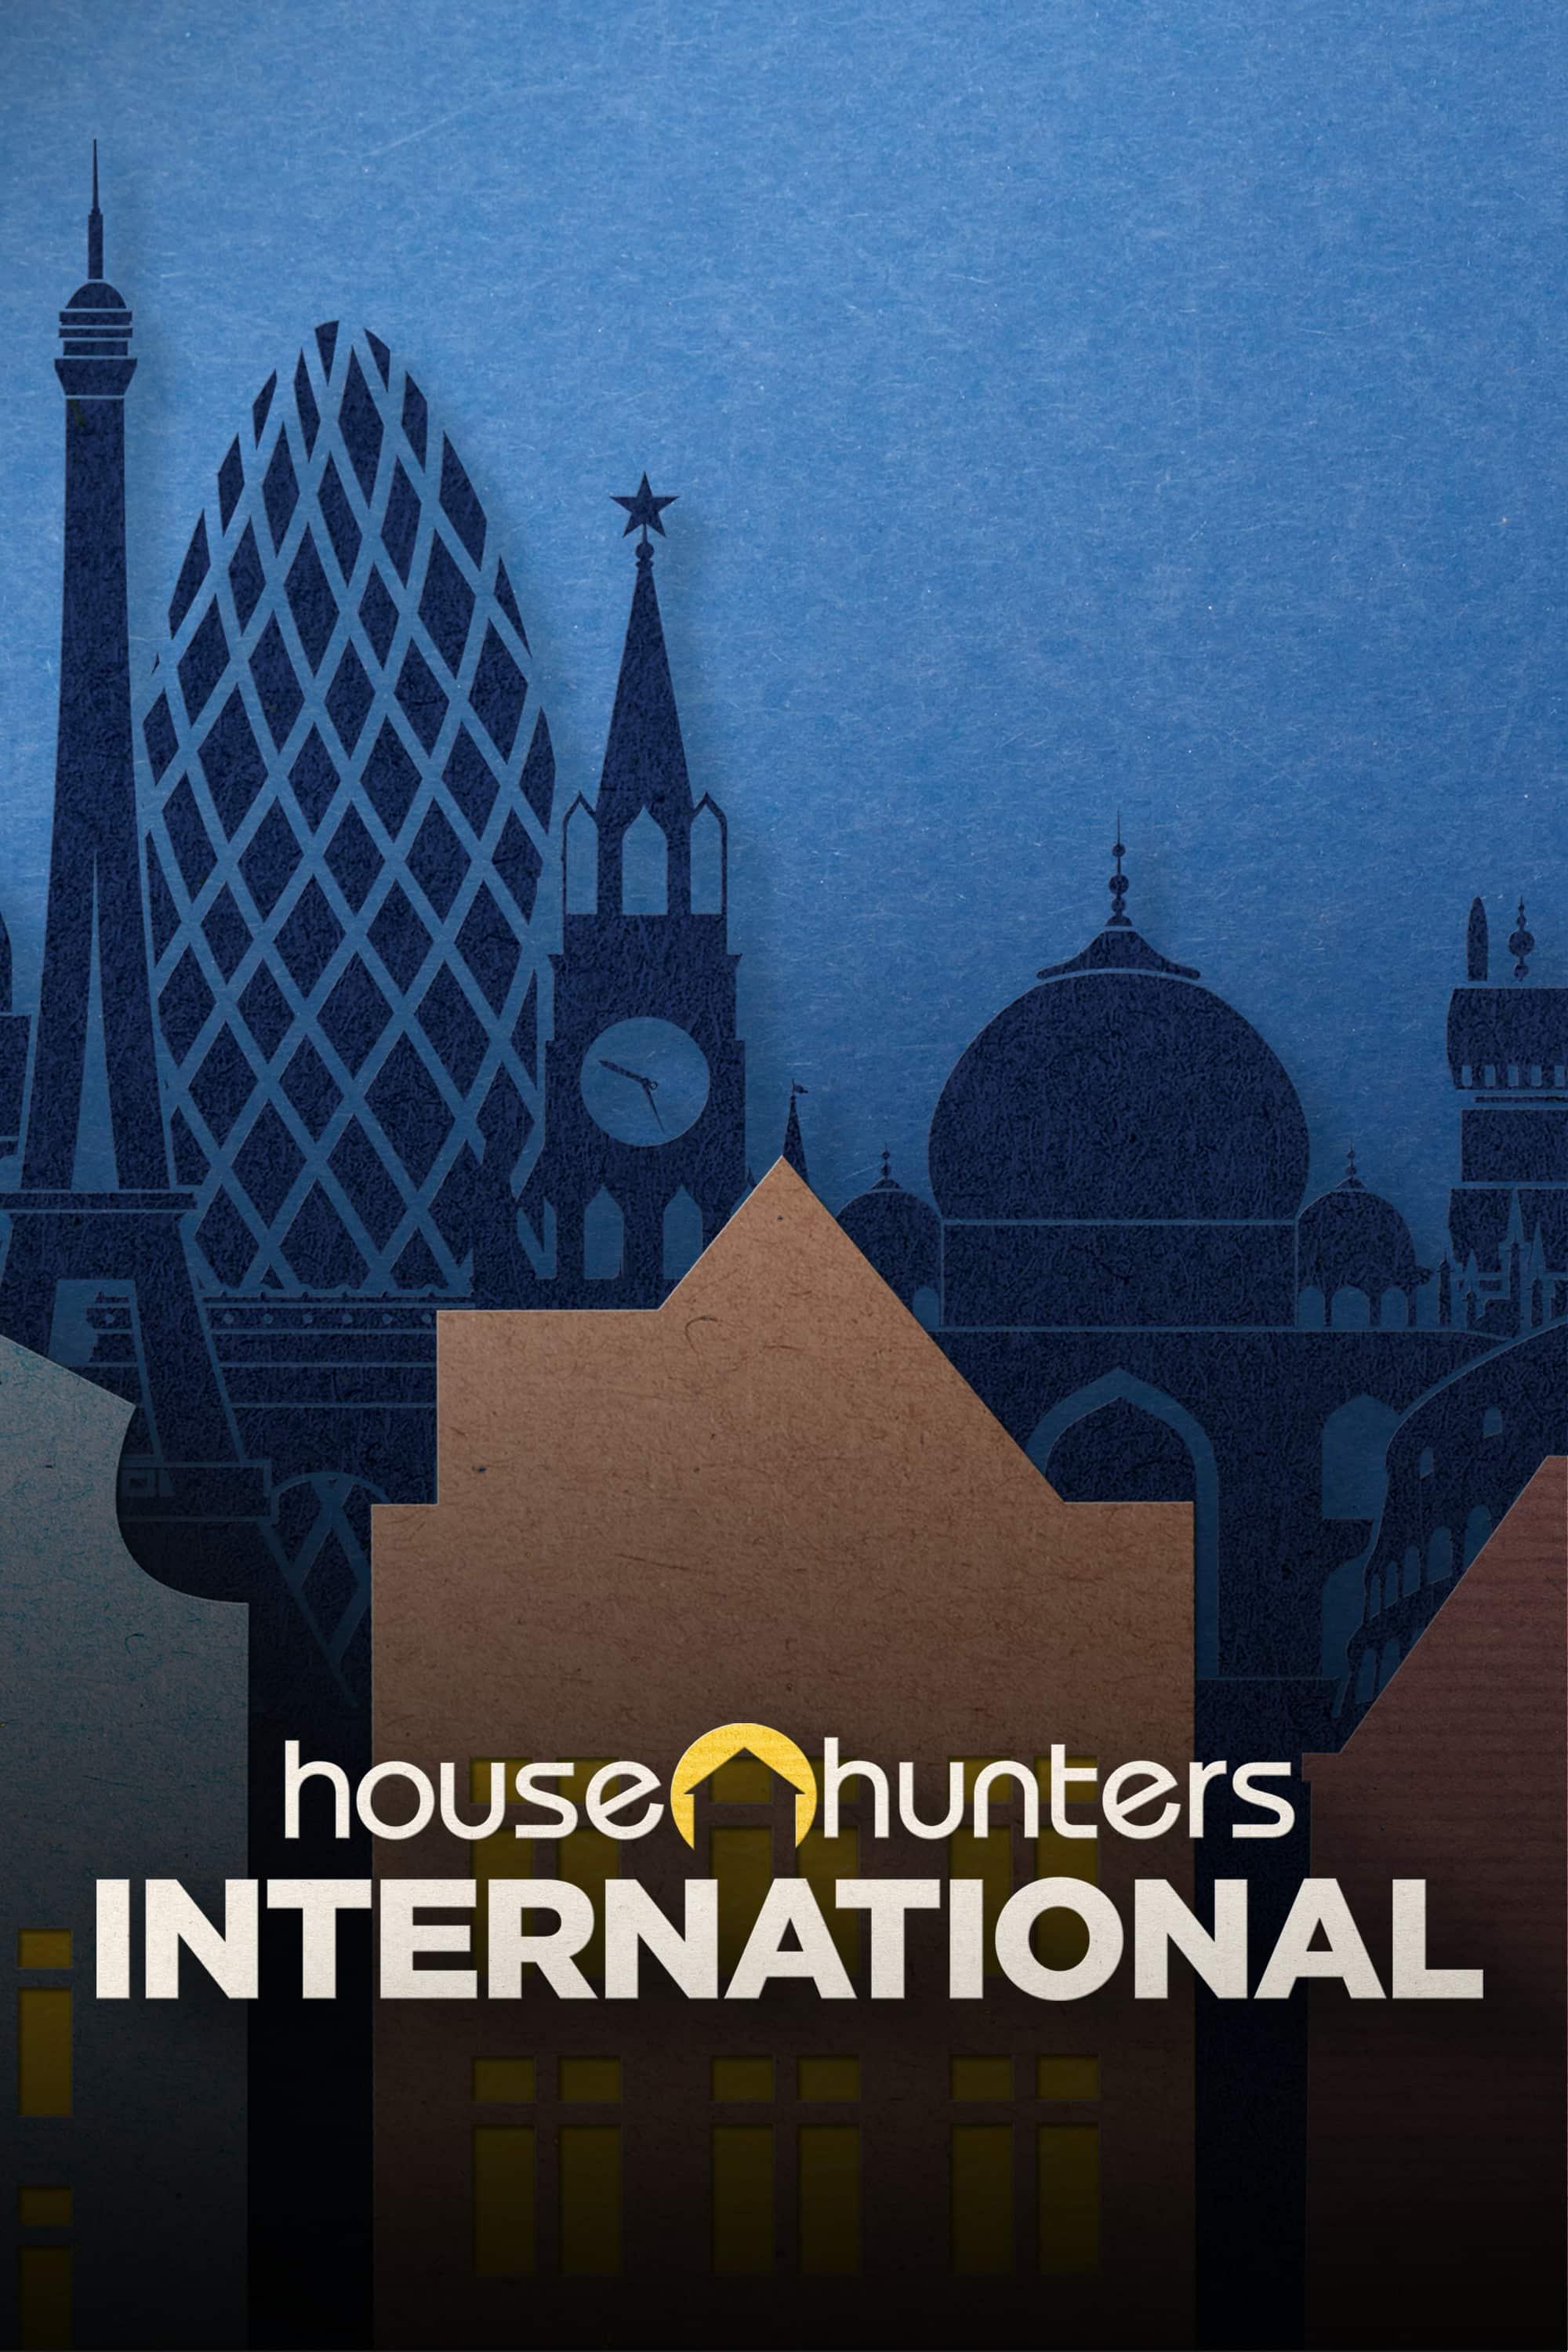 House hunters à l'international